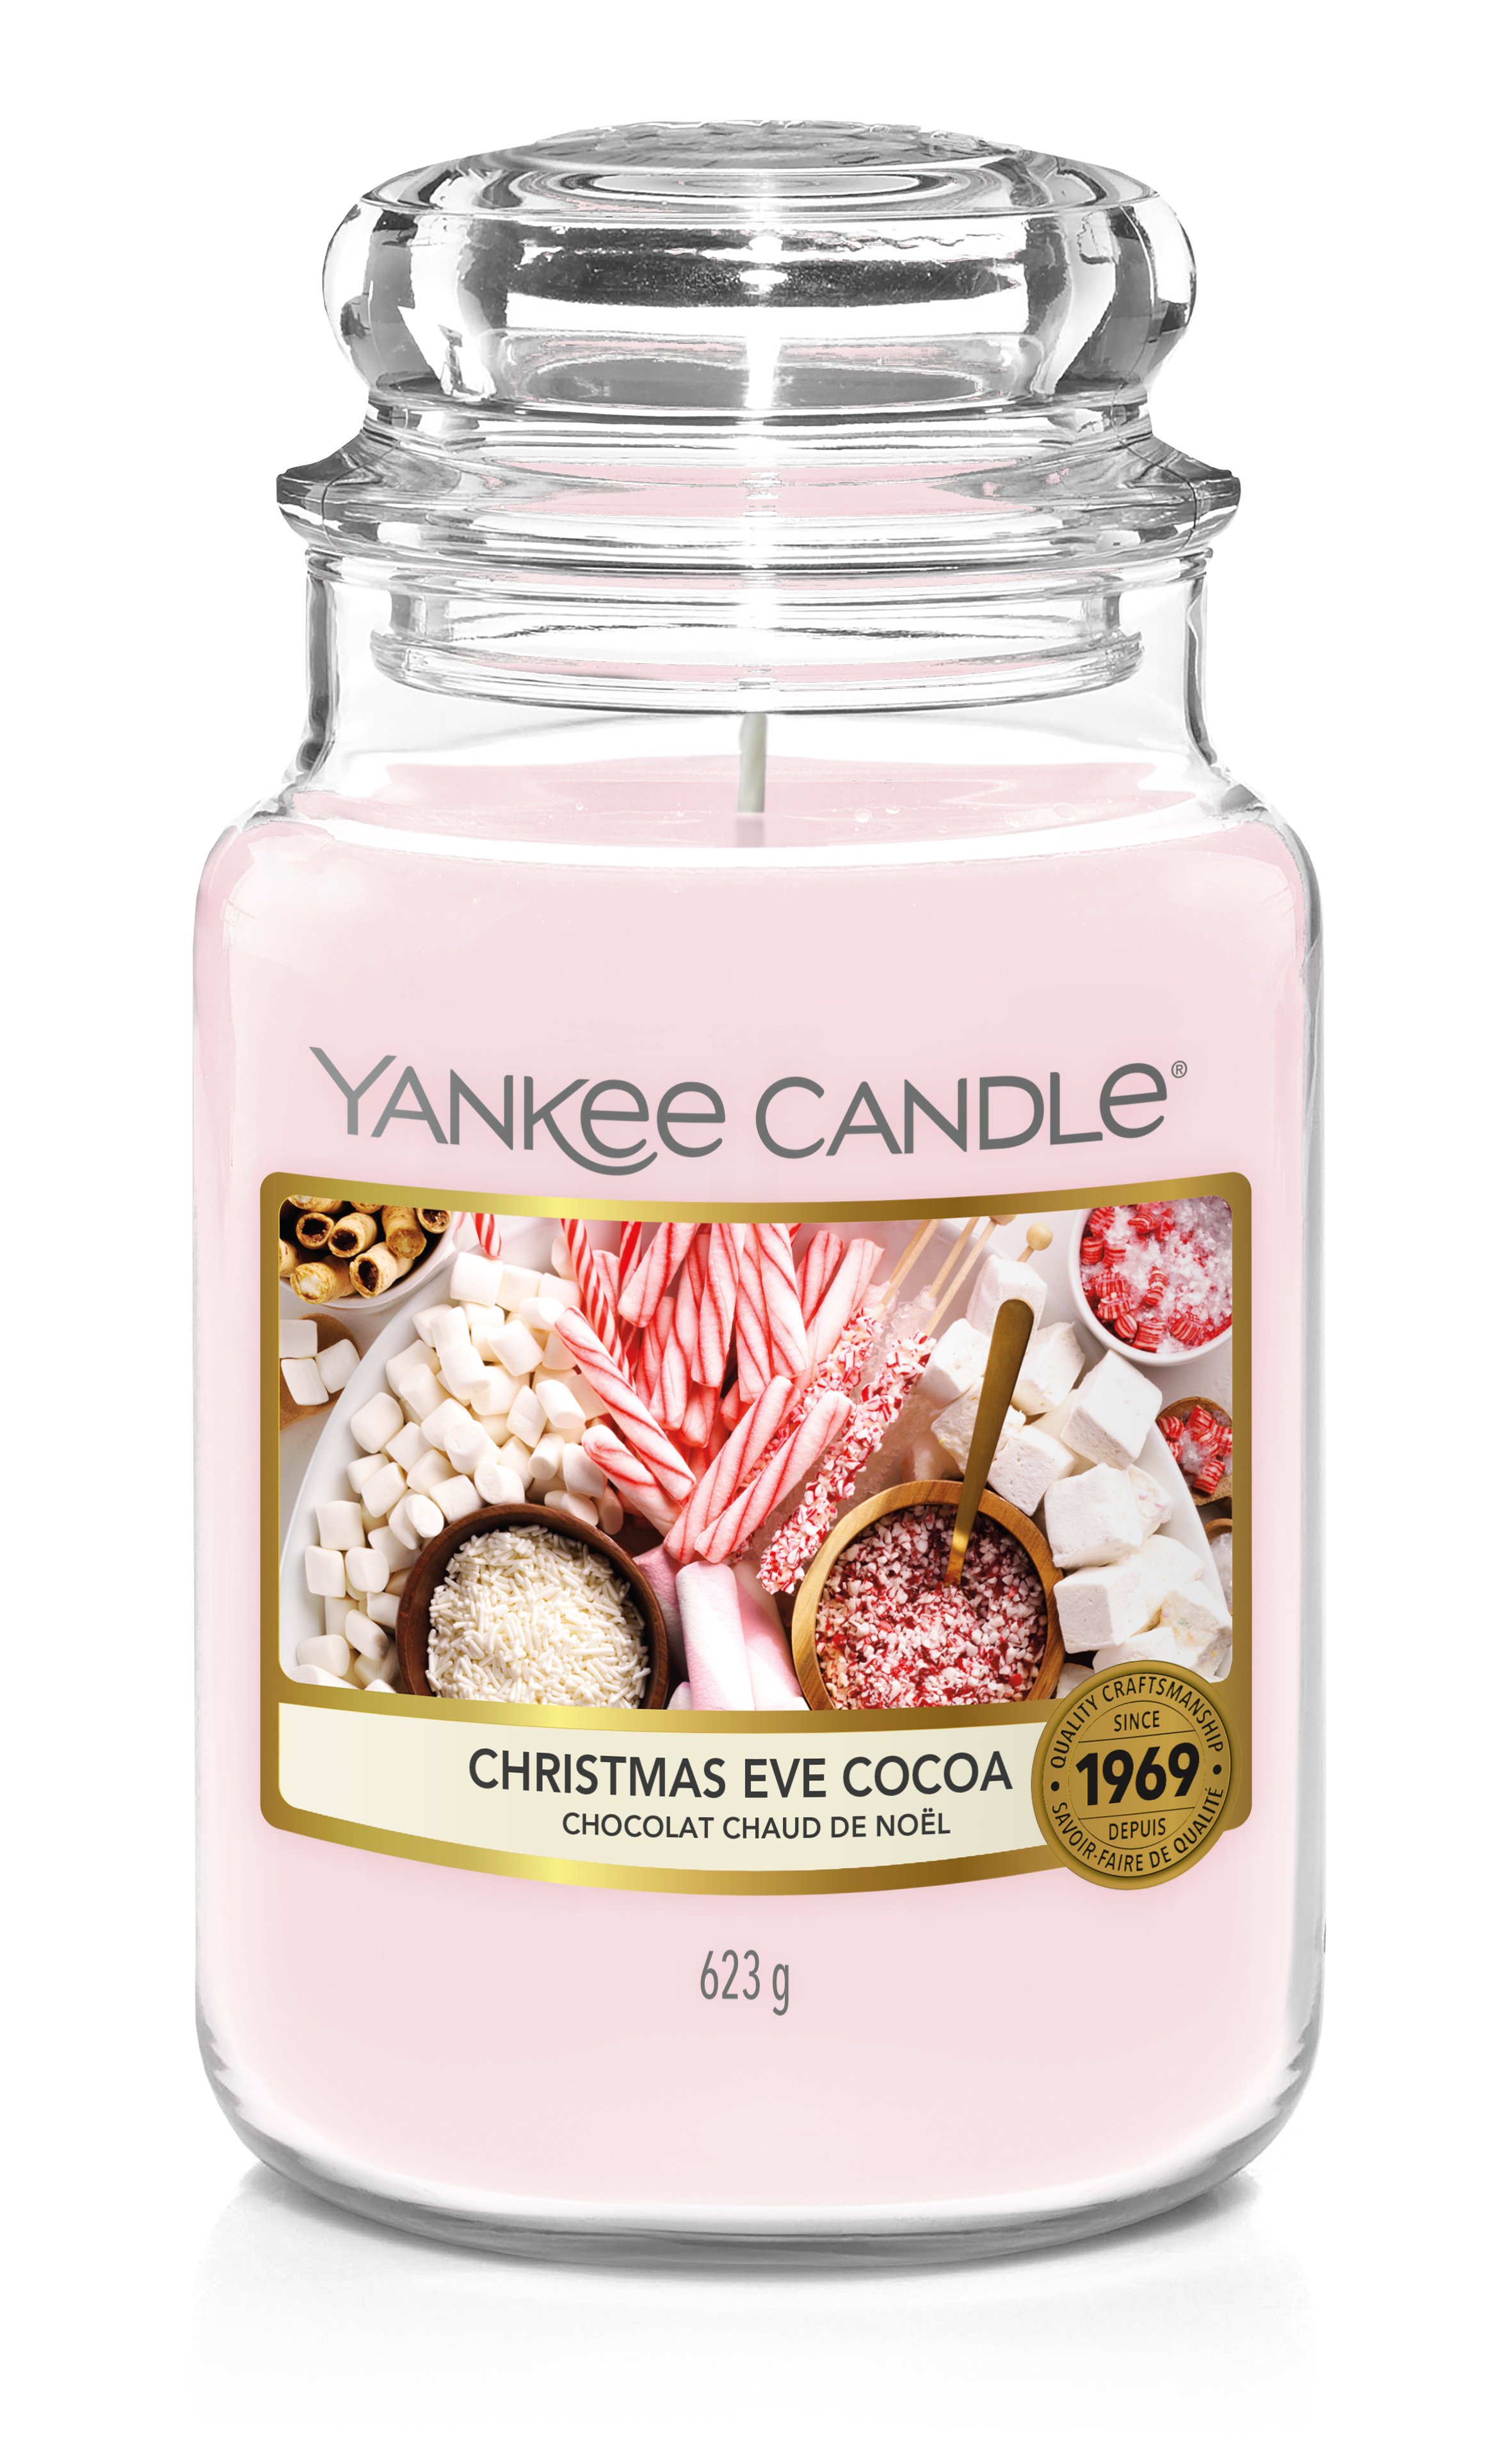 Yankee Candle Original Large Jar Christmas Eve Cocoa